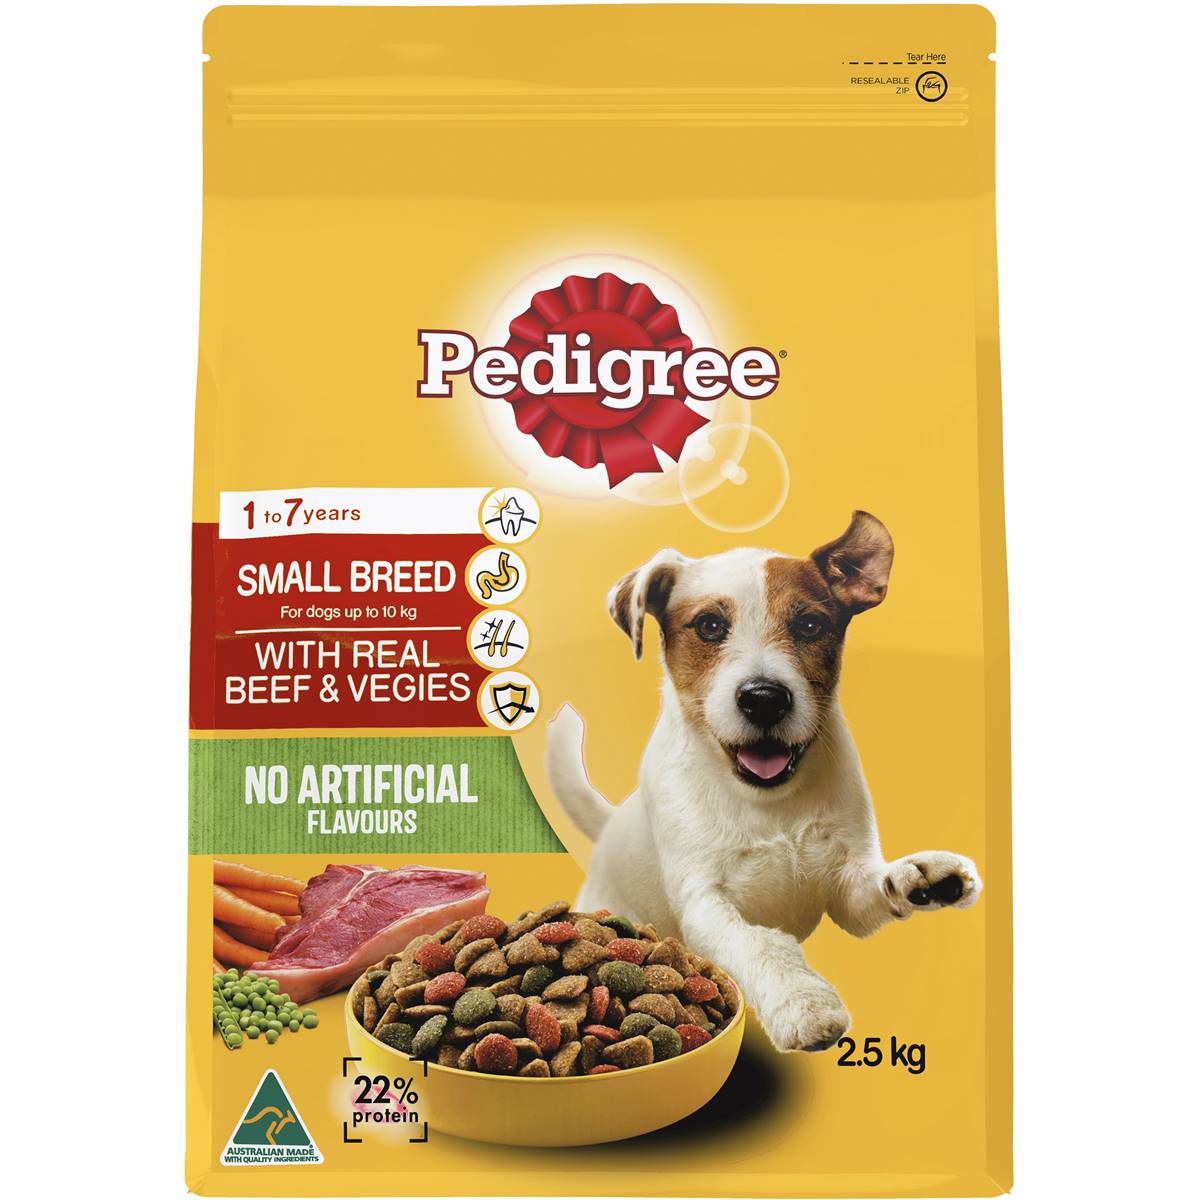 Pedigree Small Dog breeds